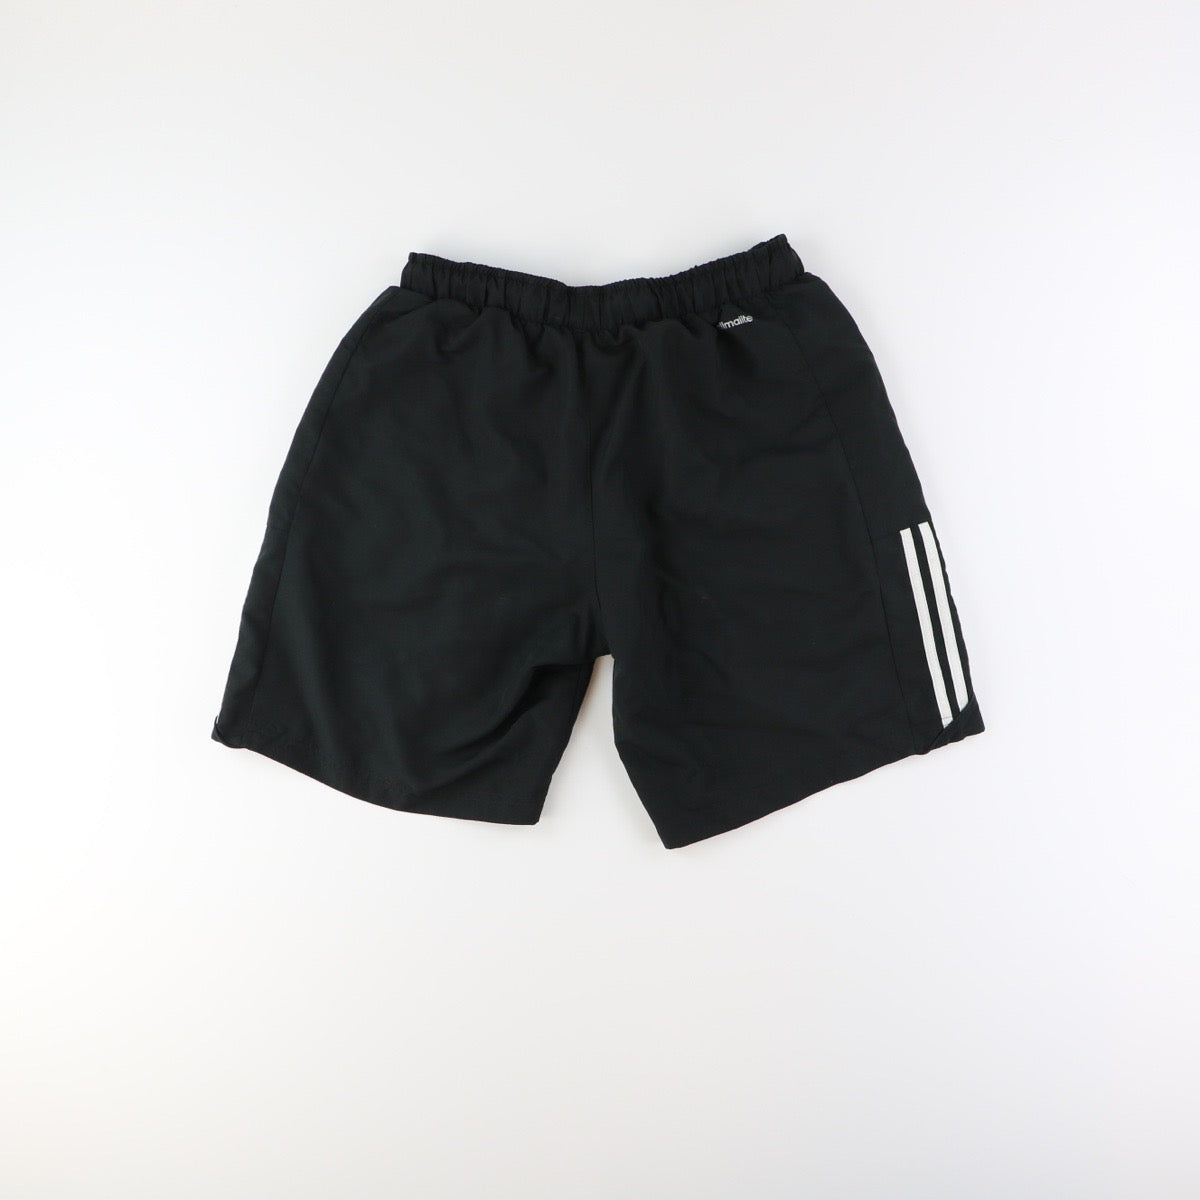 Adidas Shorts (M)